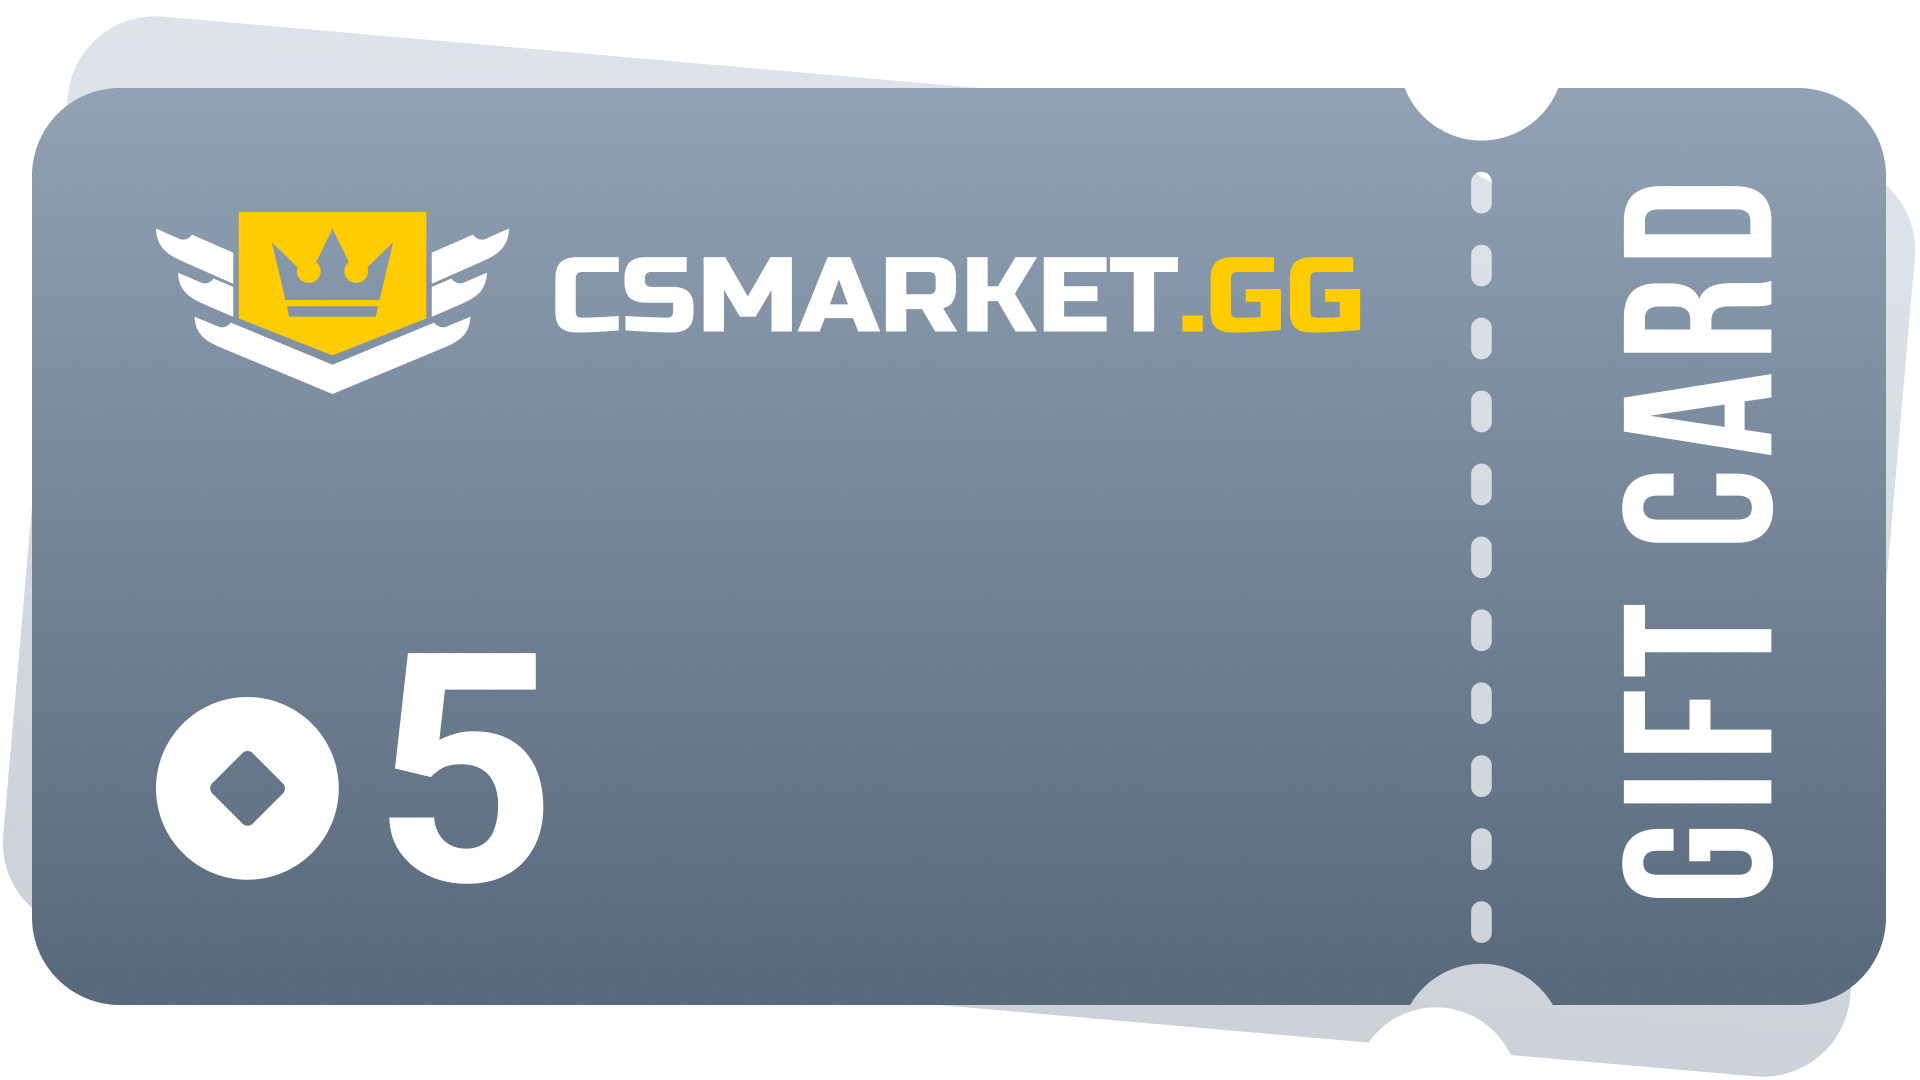 [$ 3.55] CSMARKET.GG 5 Gems Gift Card